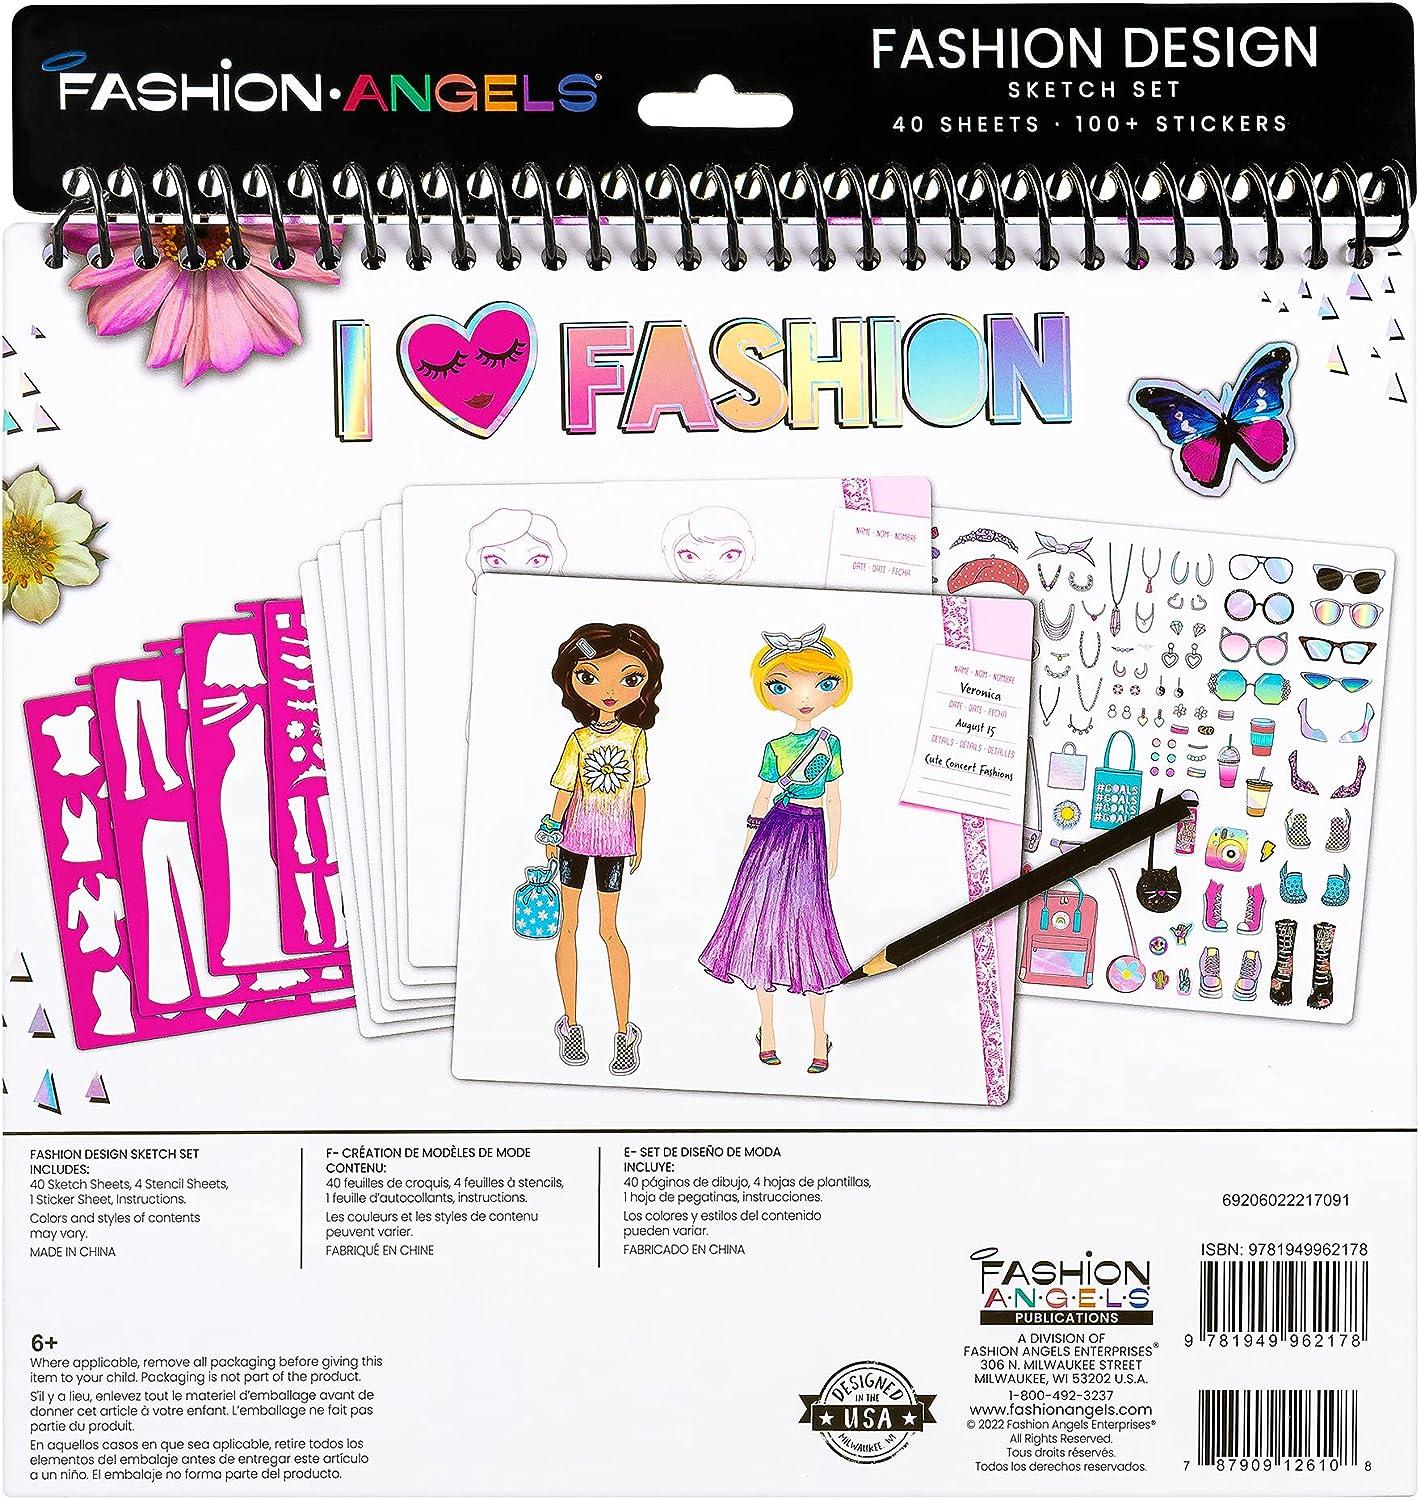 Fashion design sketchbook, Fashion sketchbook inspiration, Fashion design  portfolio